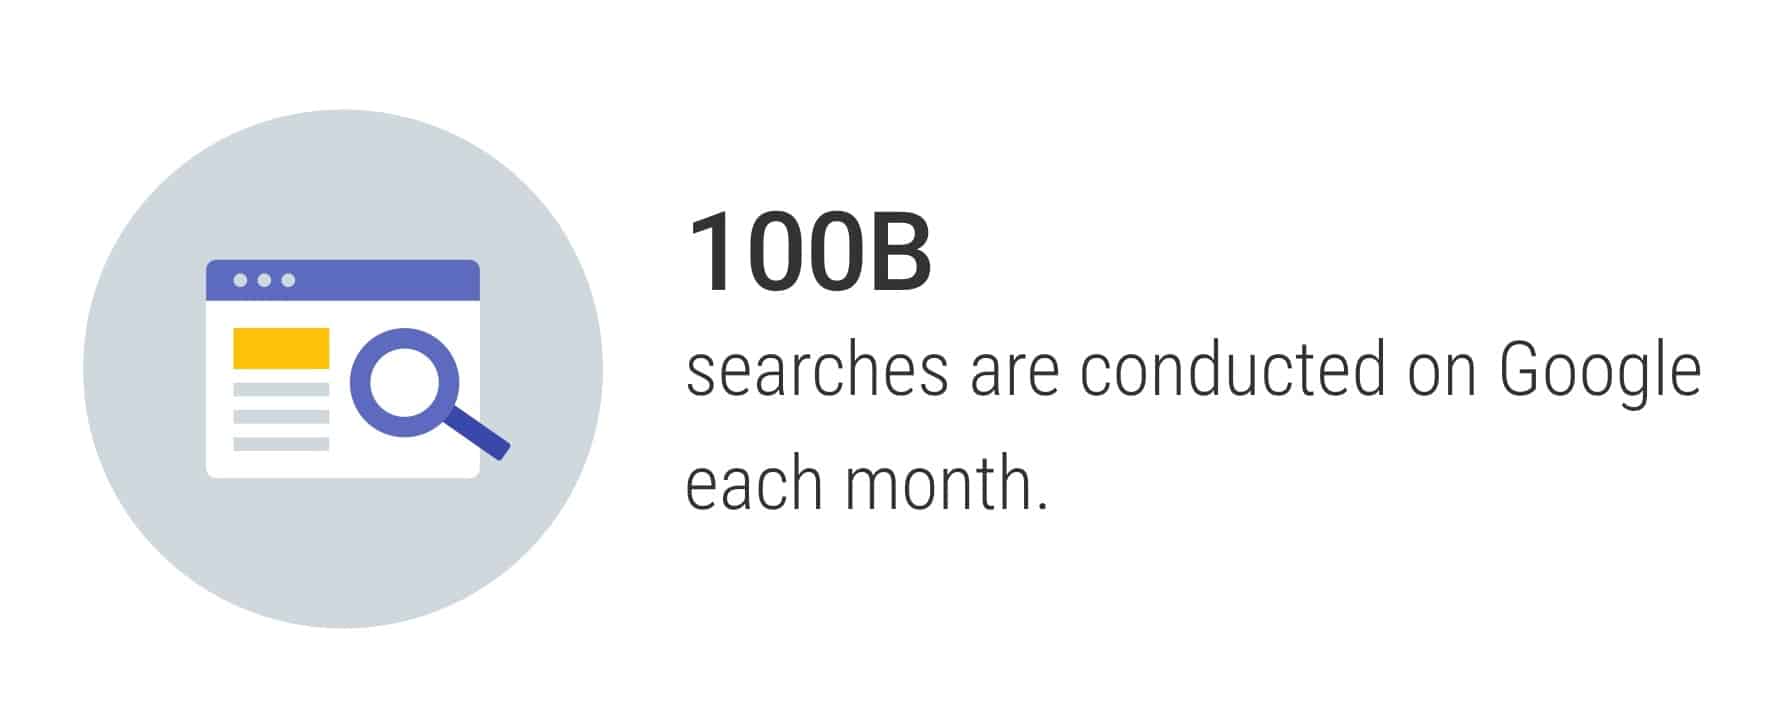 Google searches per month